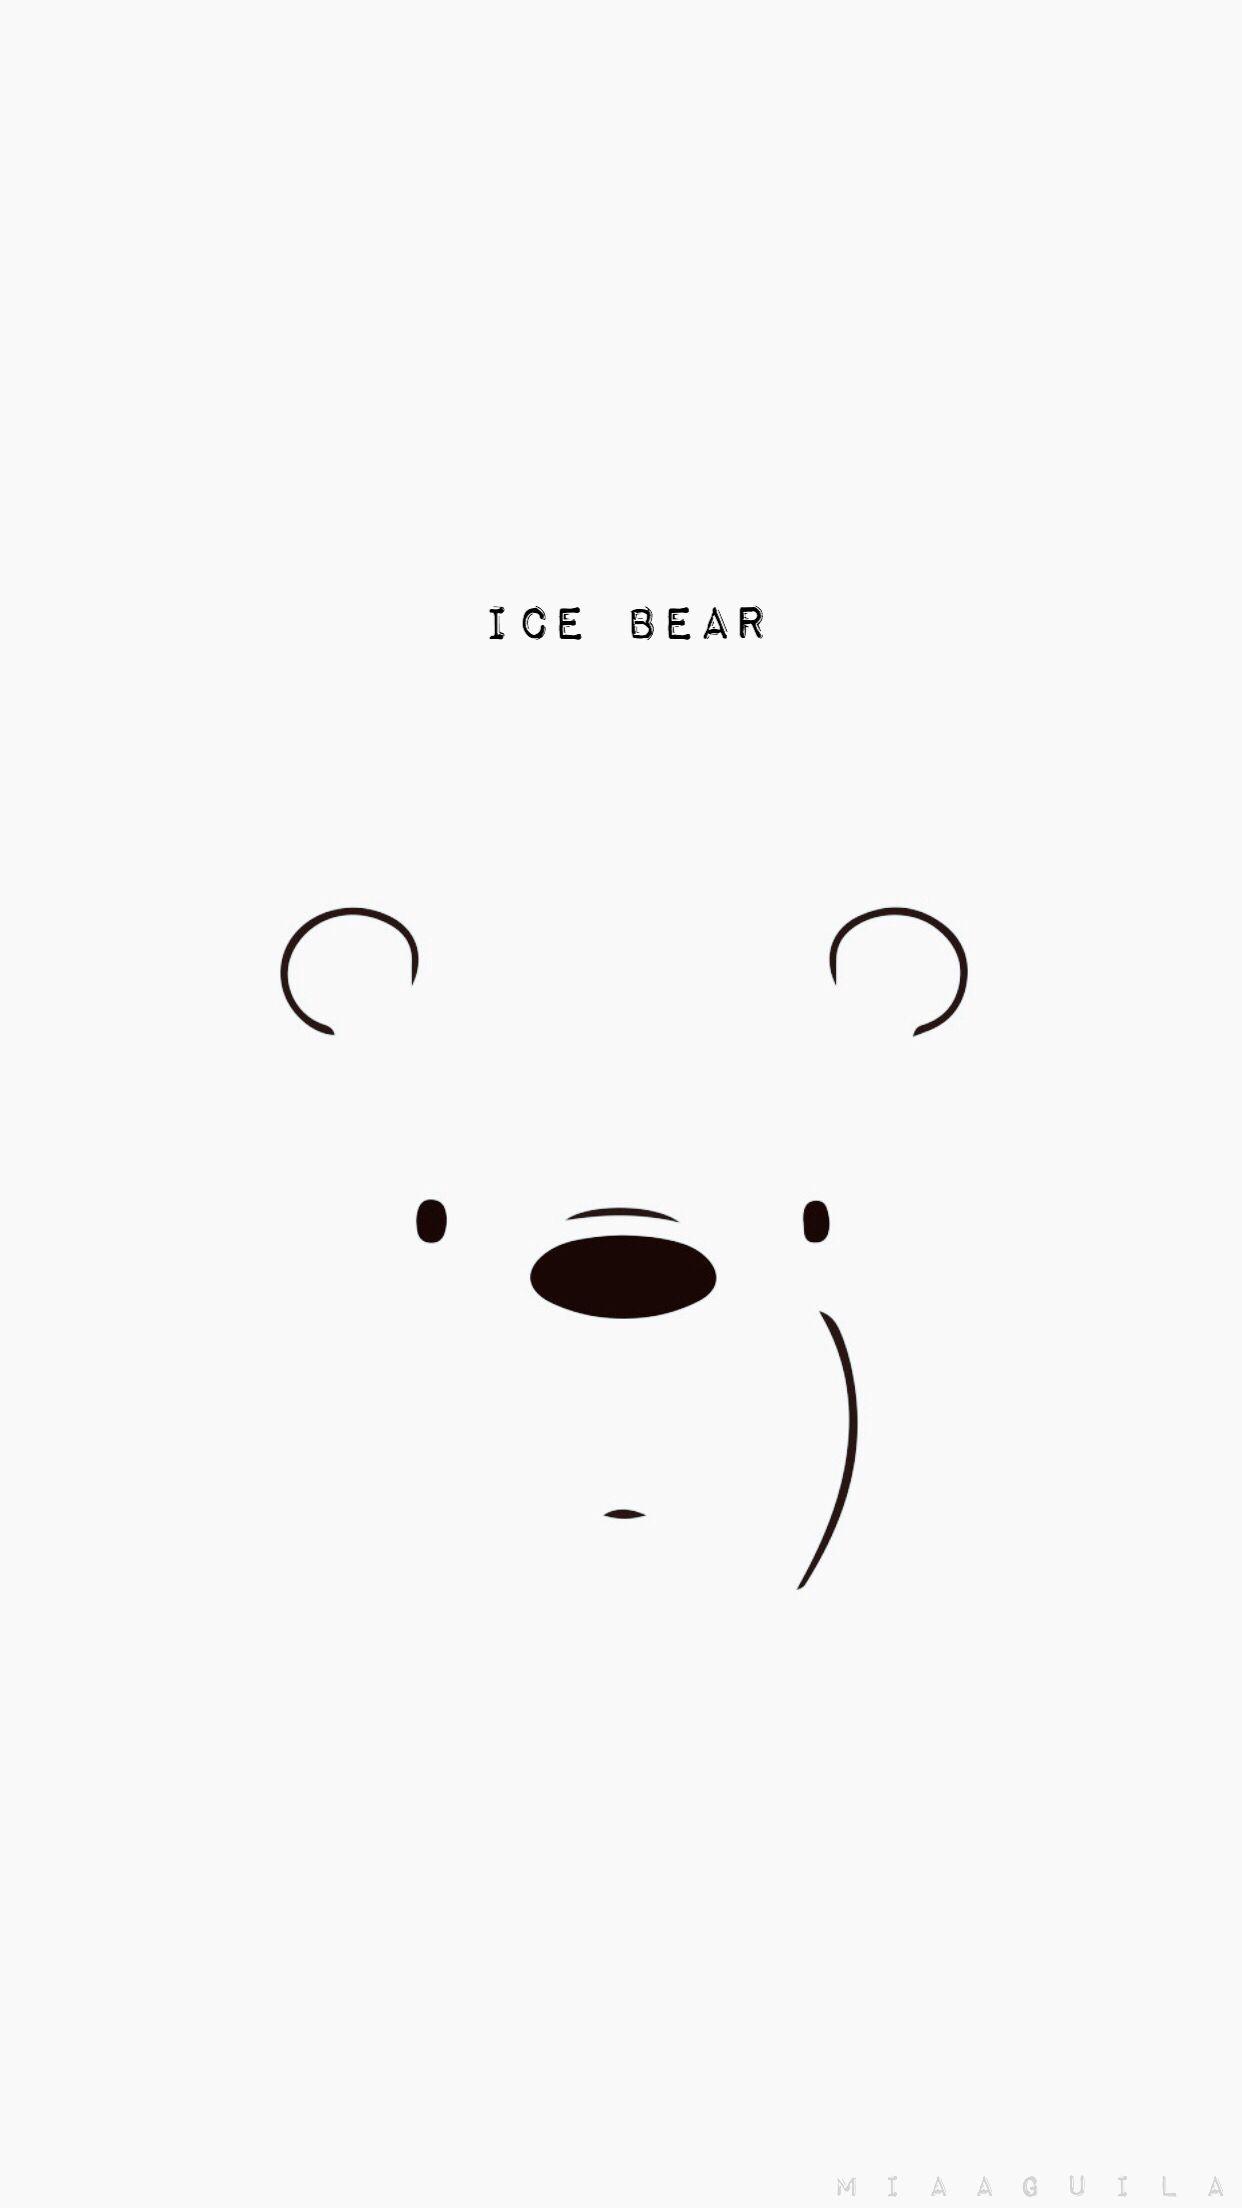 Aesthetic iPhone 7 Ice Bear Wallpaper